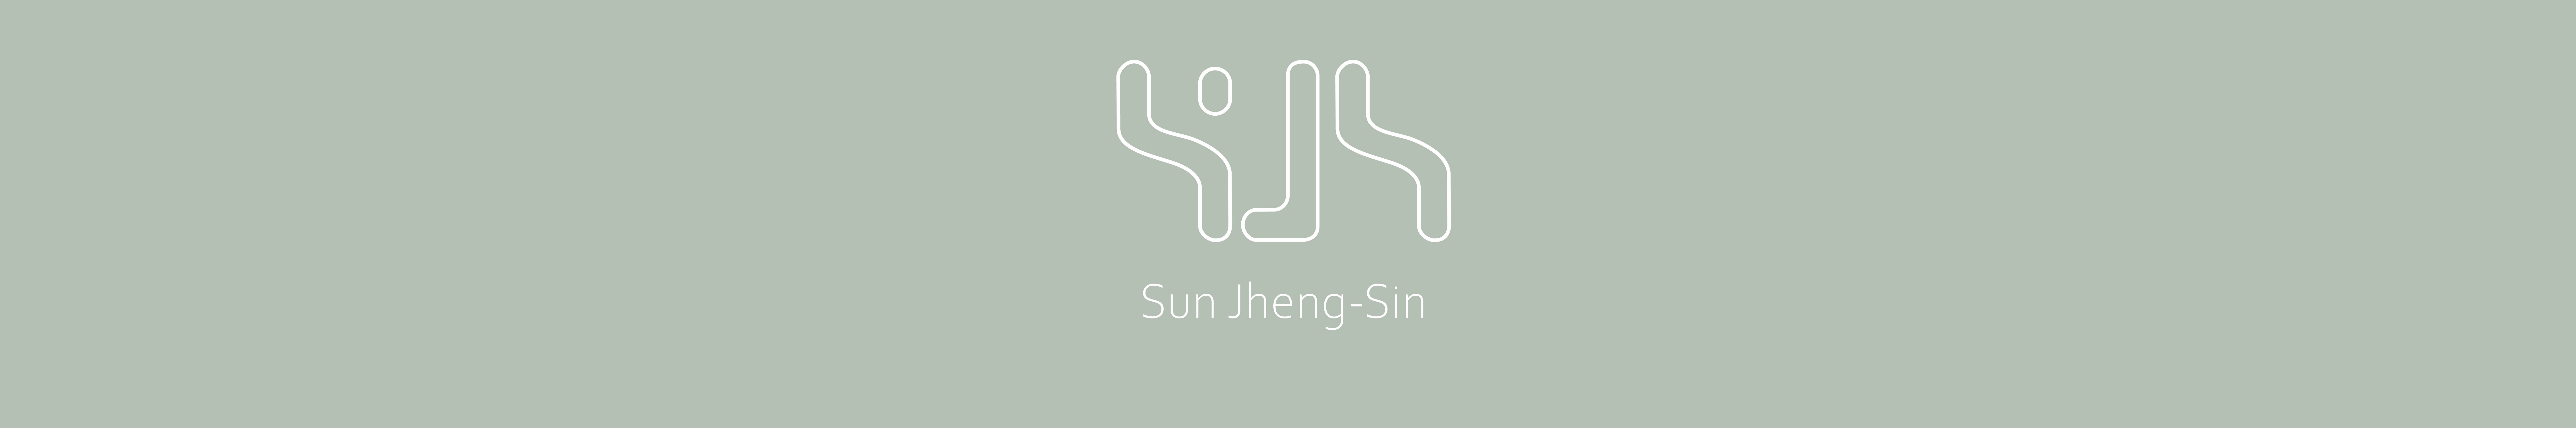 Jheng-Sin Sun's profile banner